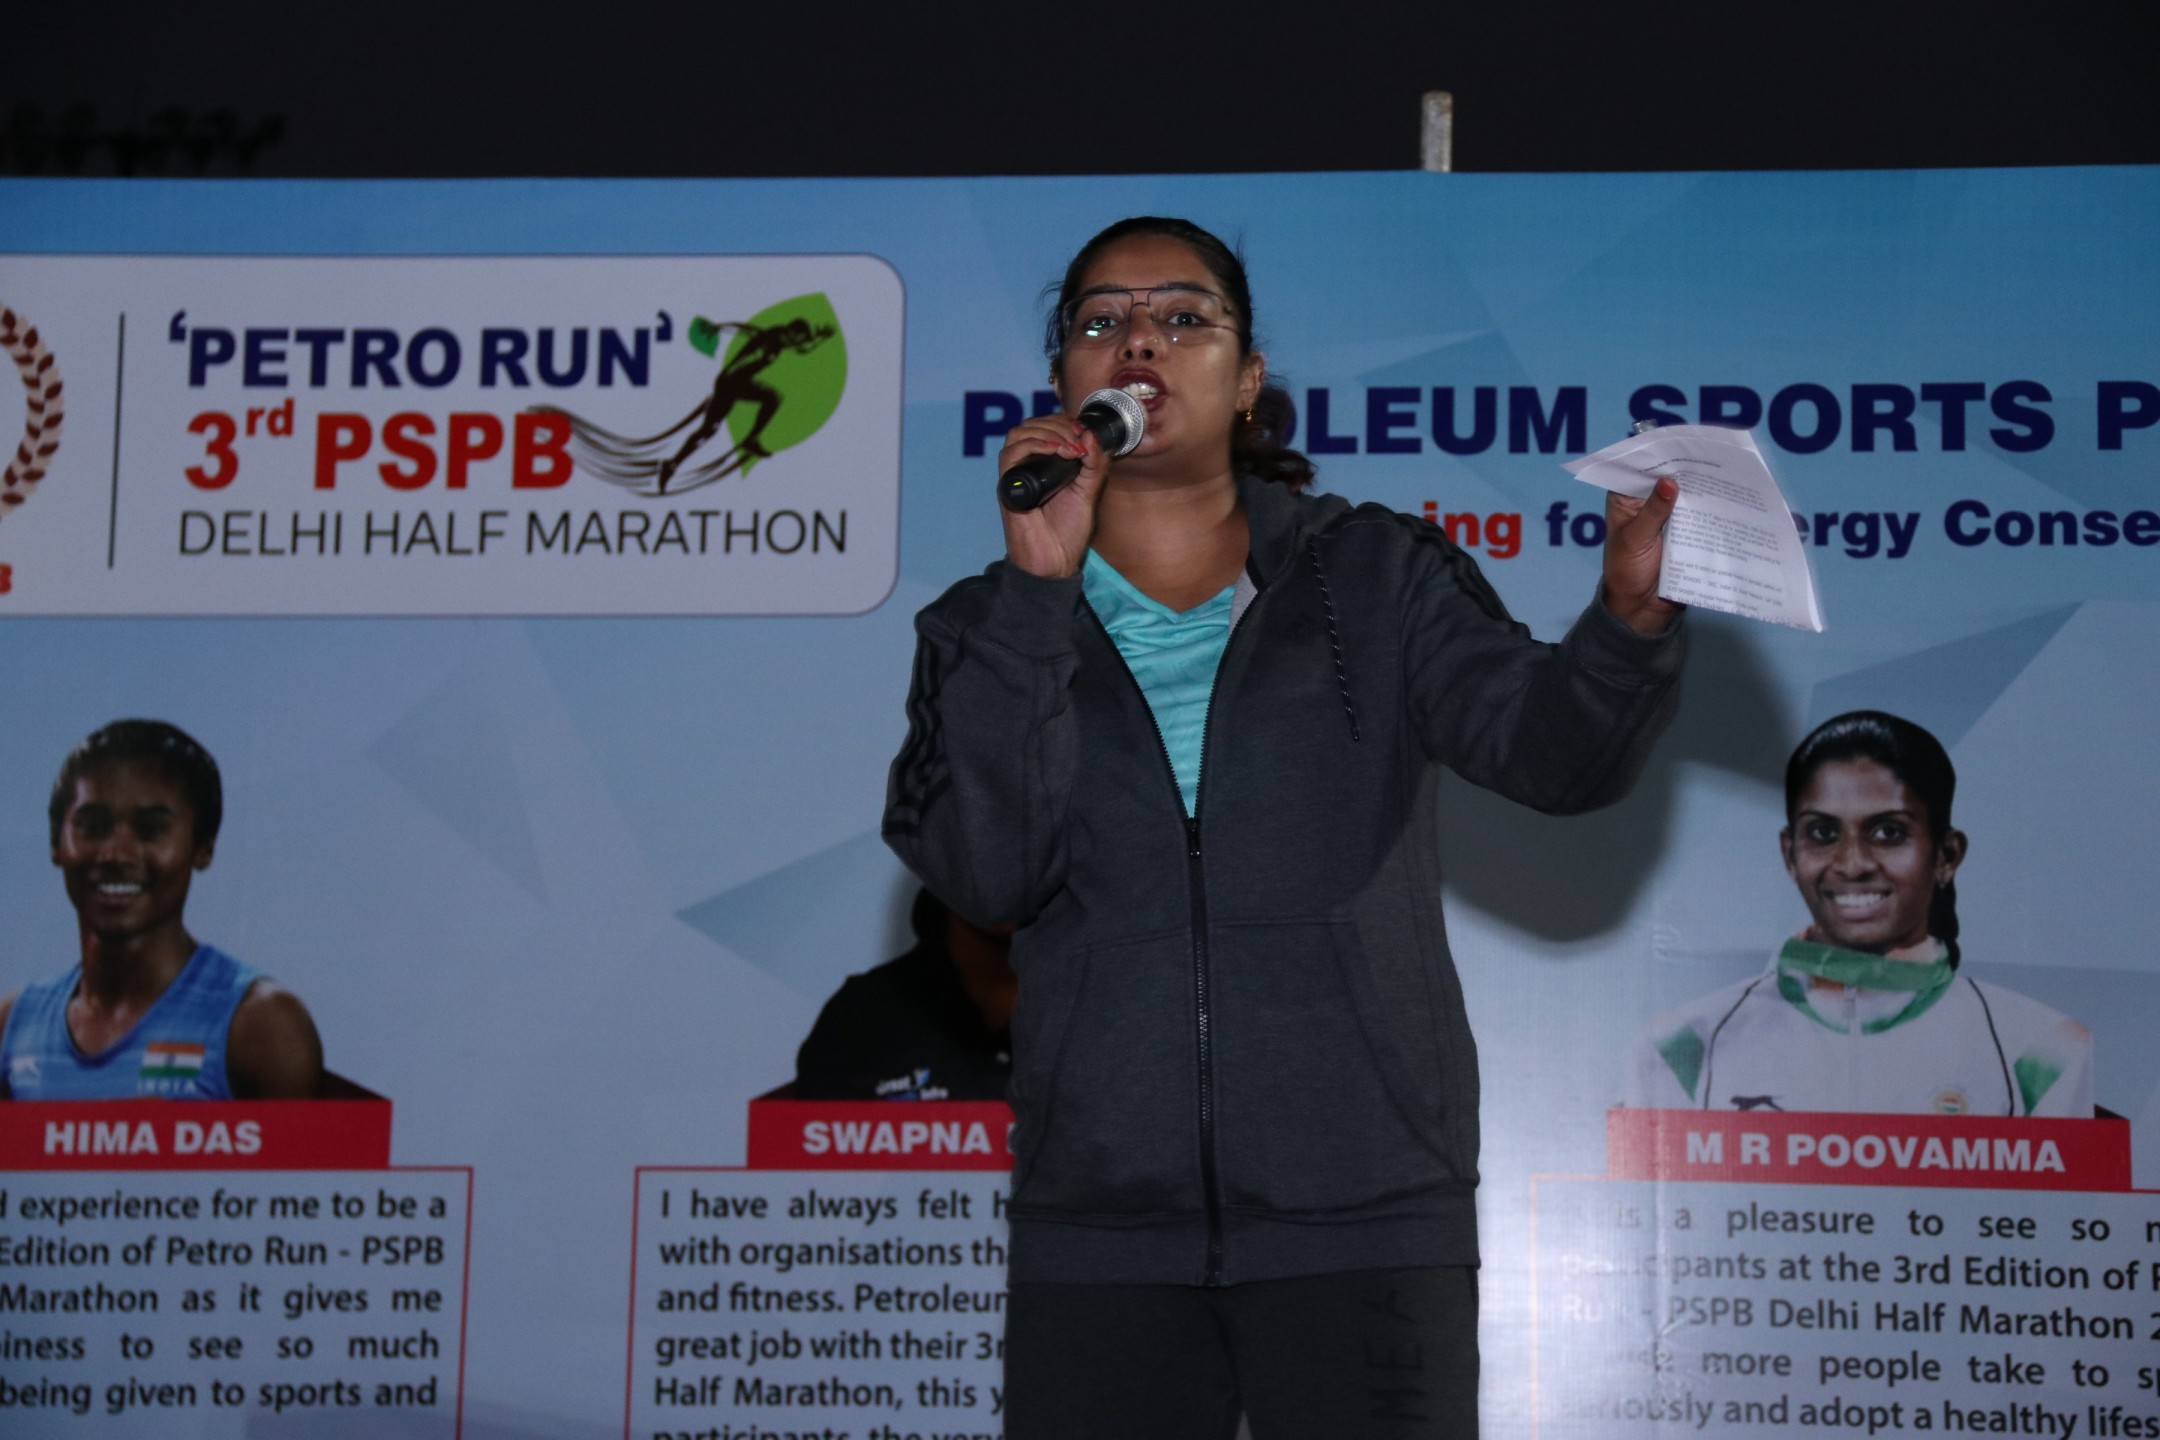 PETRO RUN 3rd PSPB Delhi Half Marathon